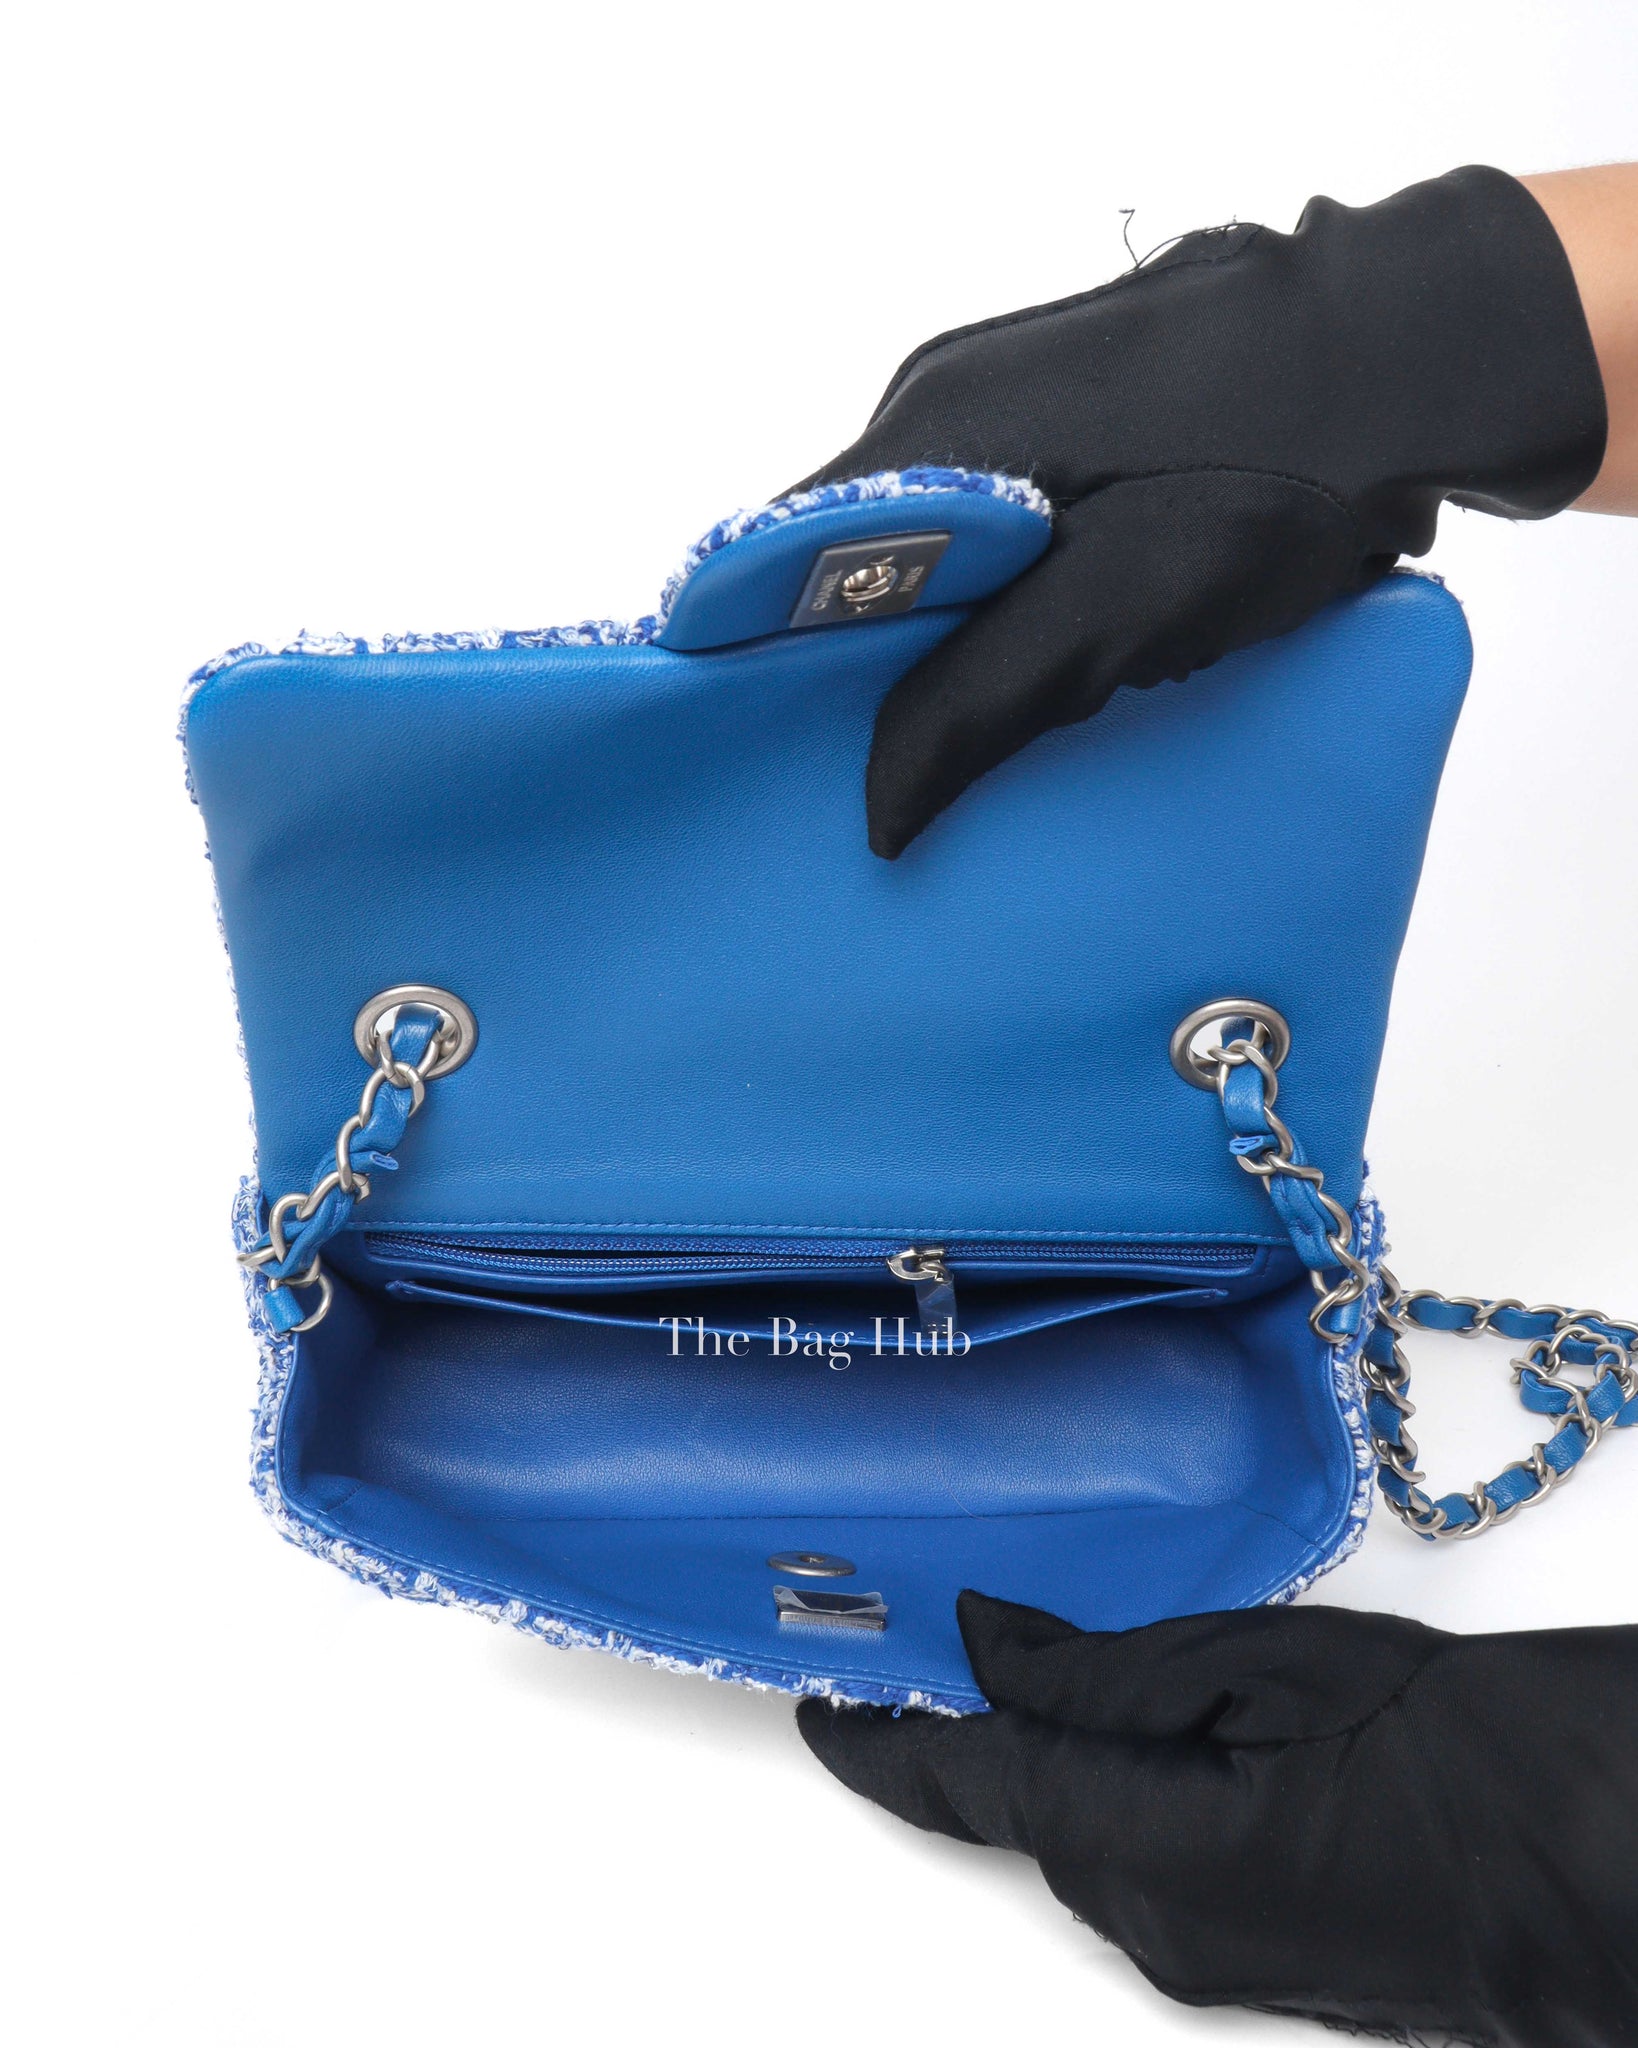 Chanel Blue/White Tweed Mini Classic Flap Bag SHW